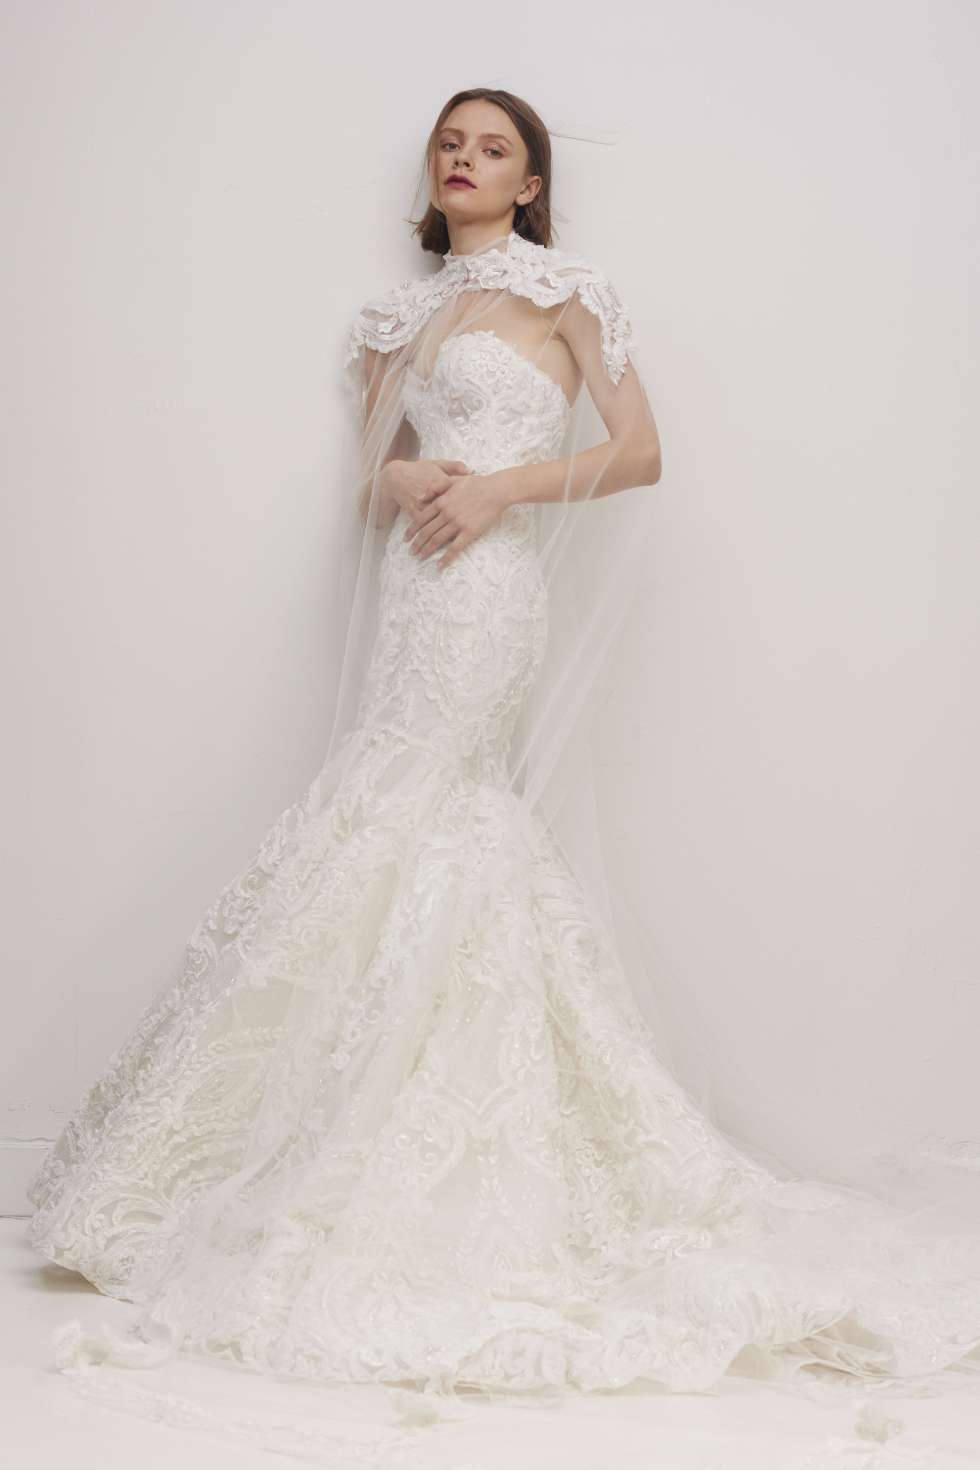 Rivini 2020 Fall Wedding Dress Collection by Rita Vinieris